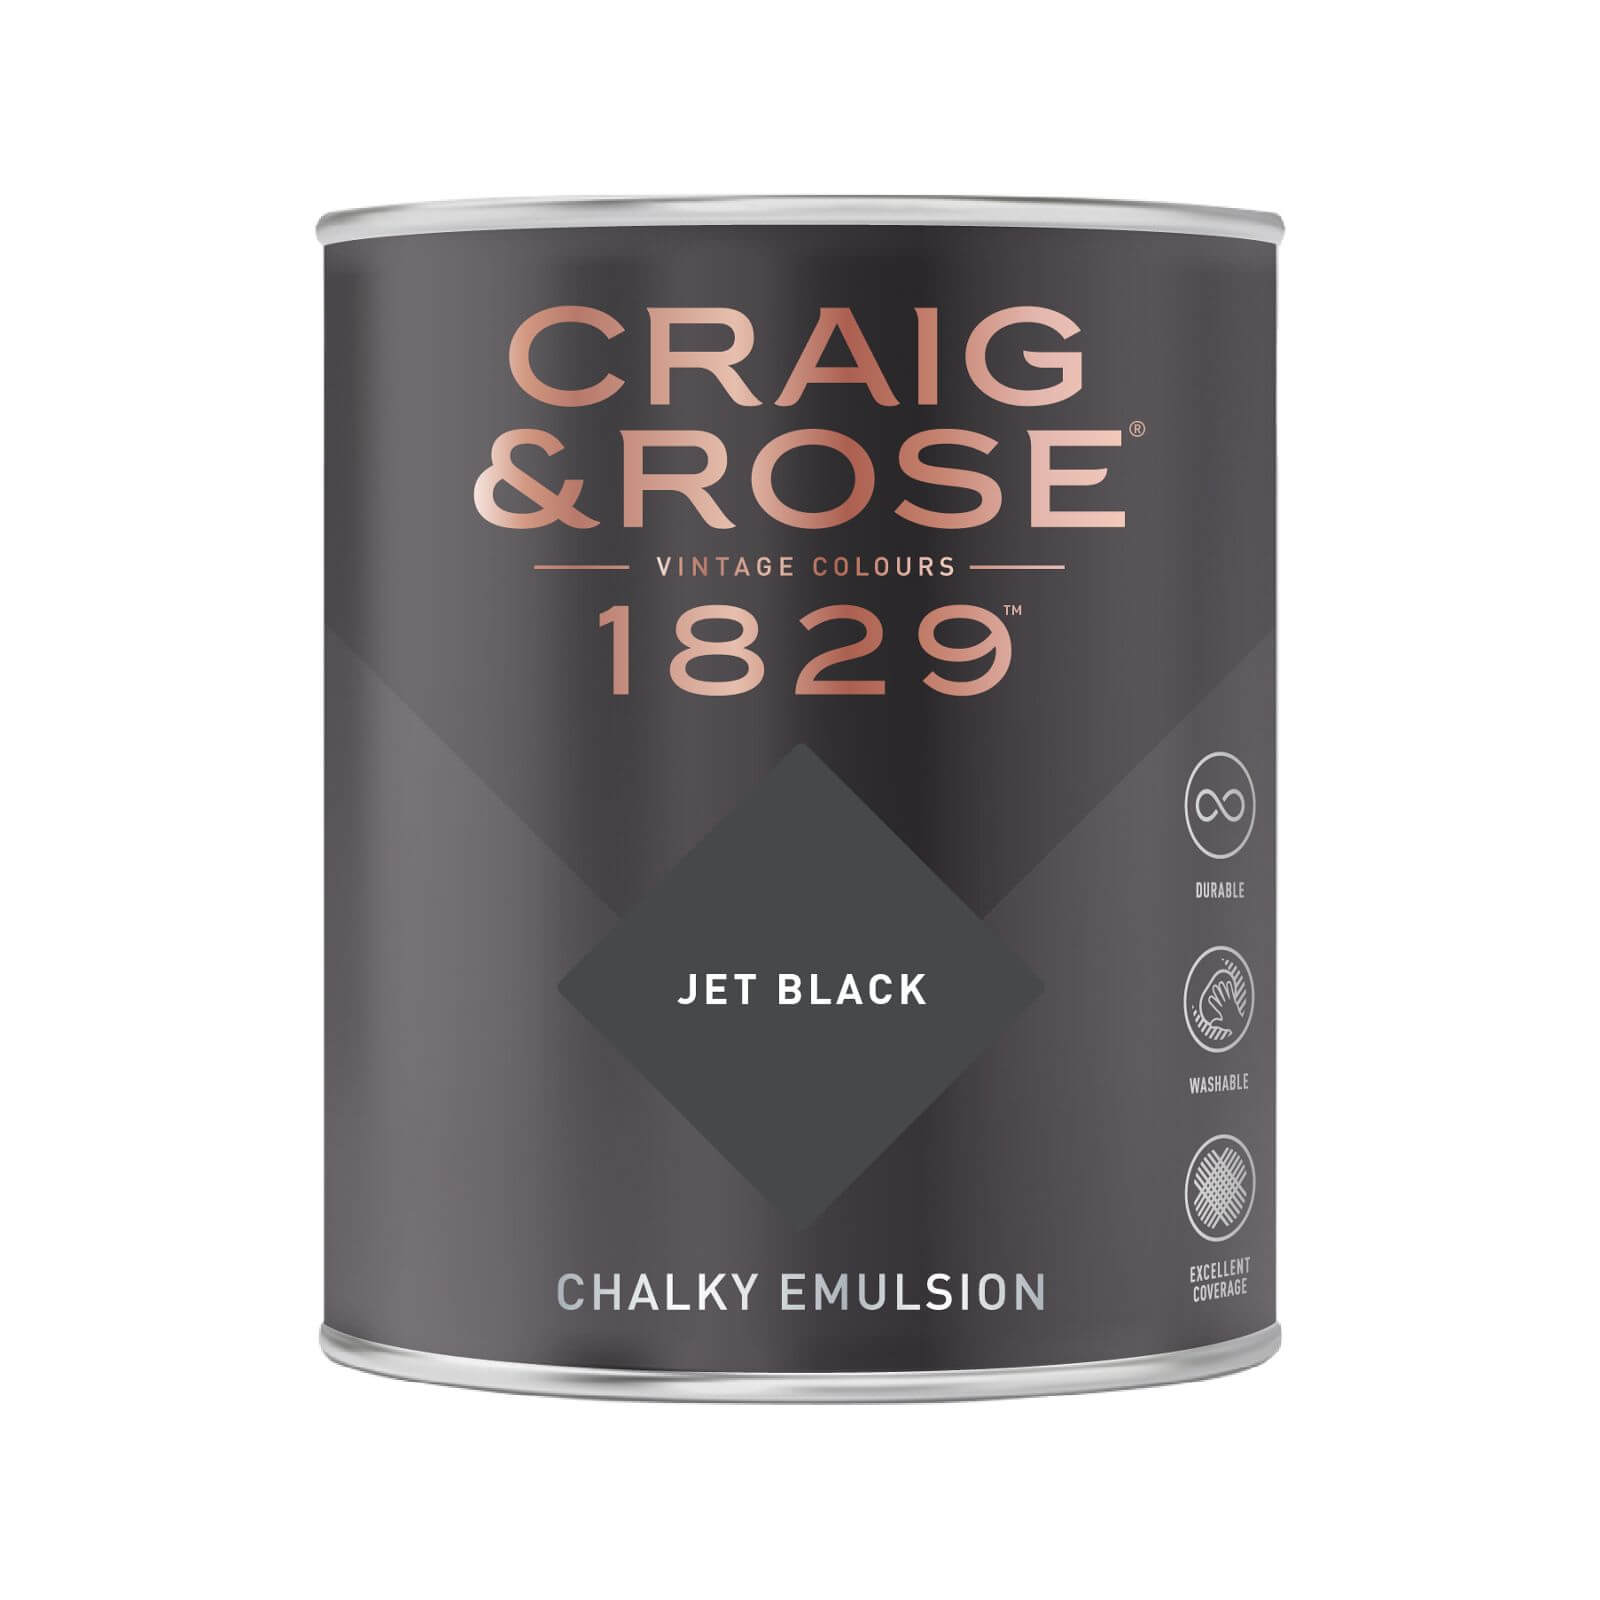 Craig & Rose 1829 Chalky Emulsion Paint Jet Black - 750ml